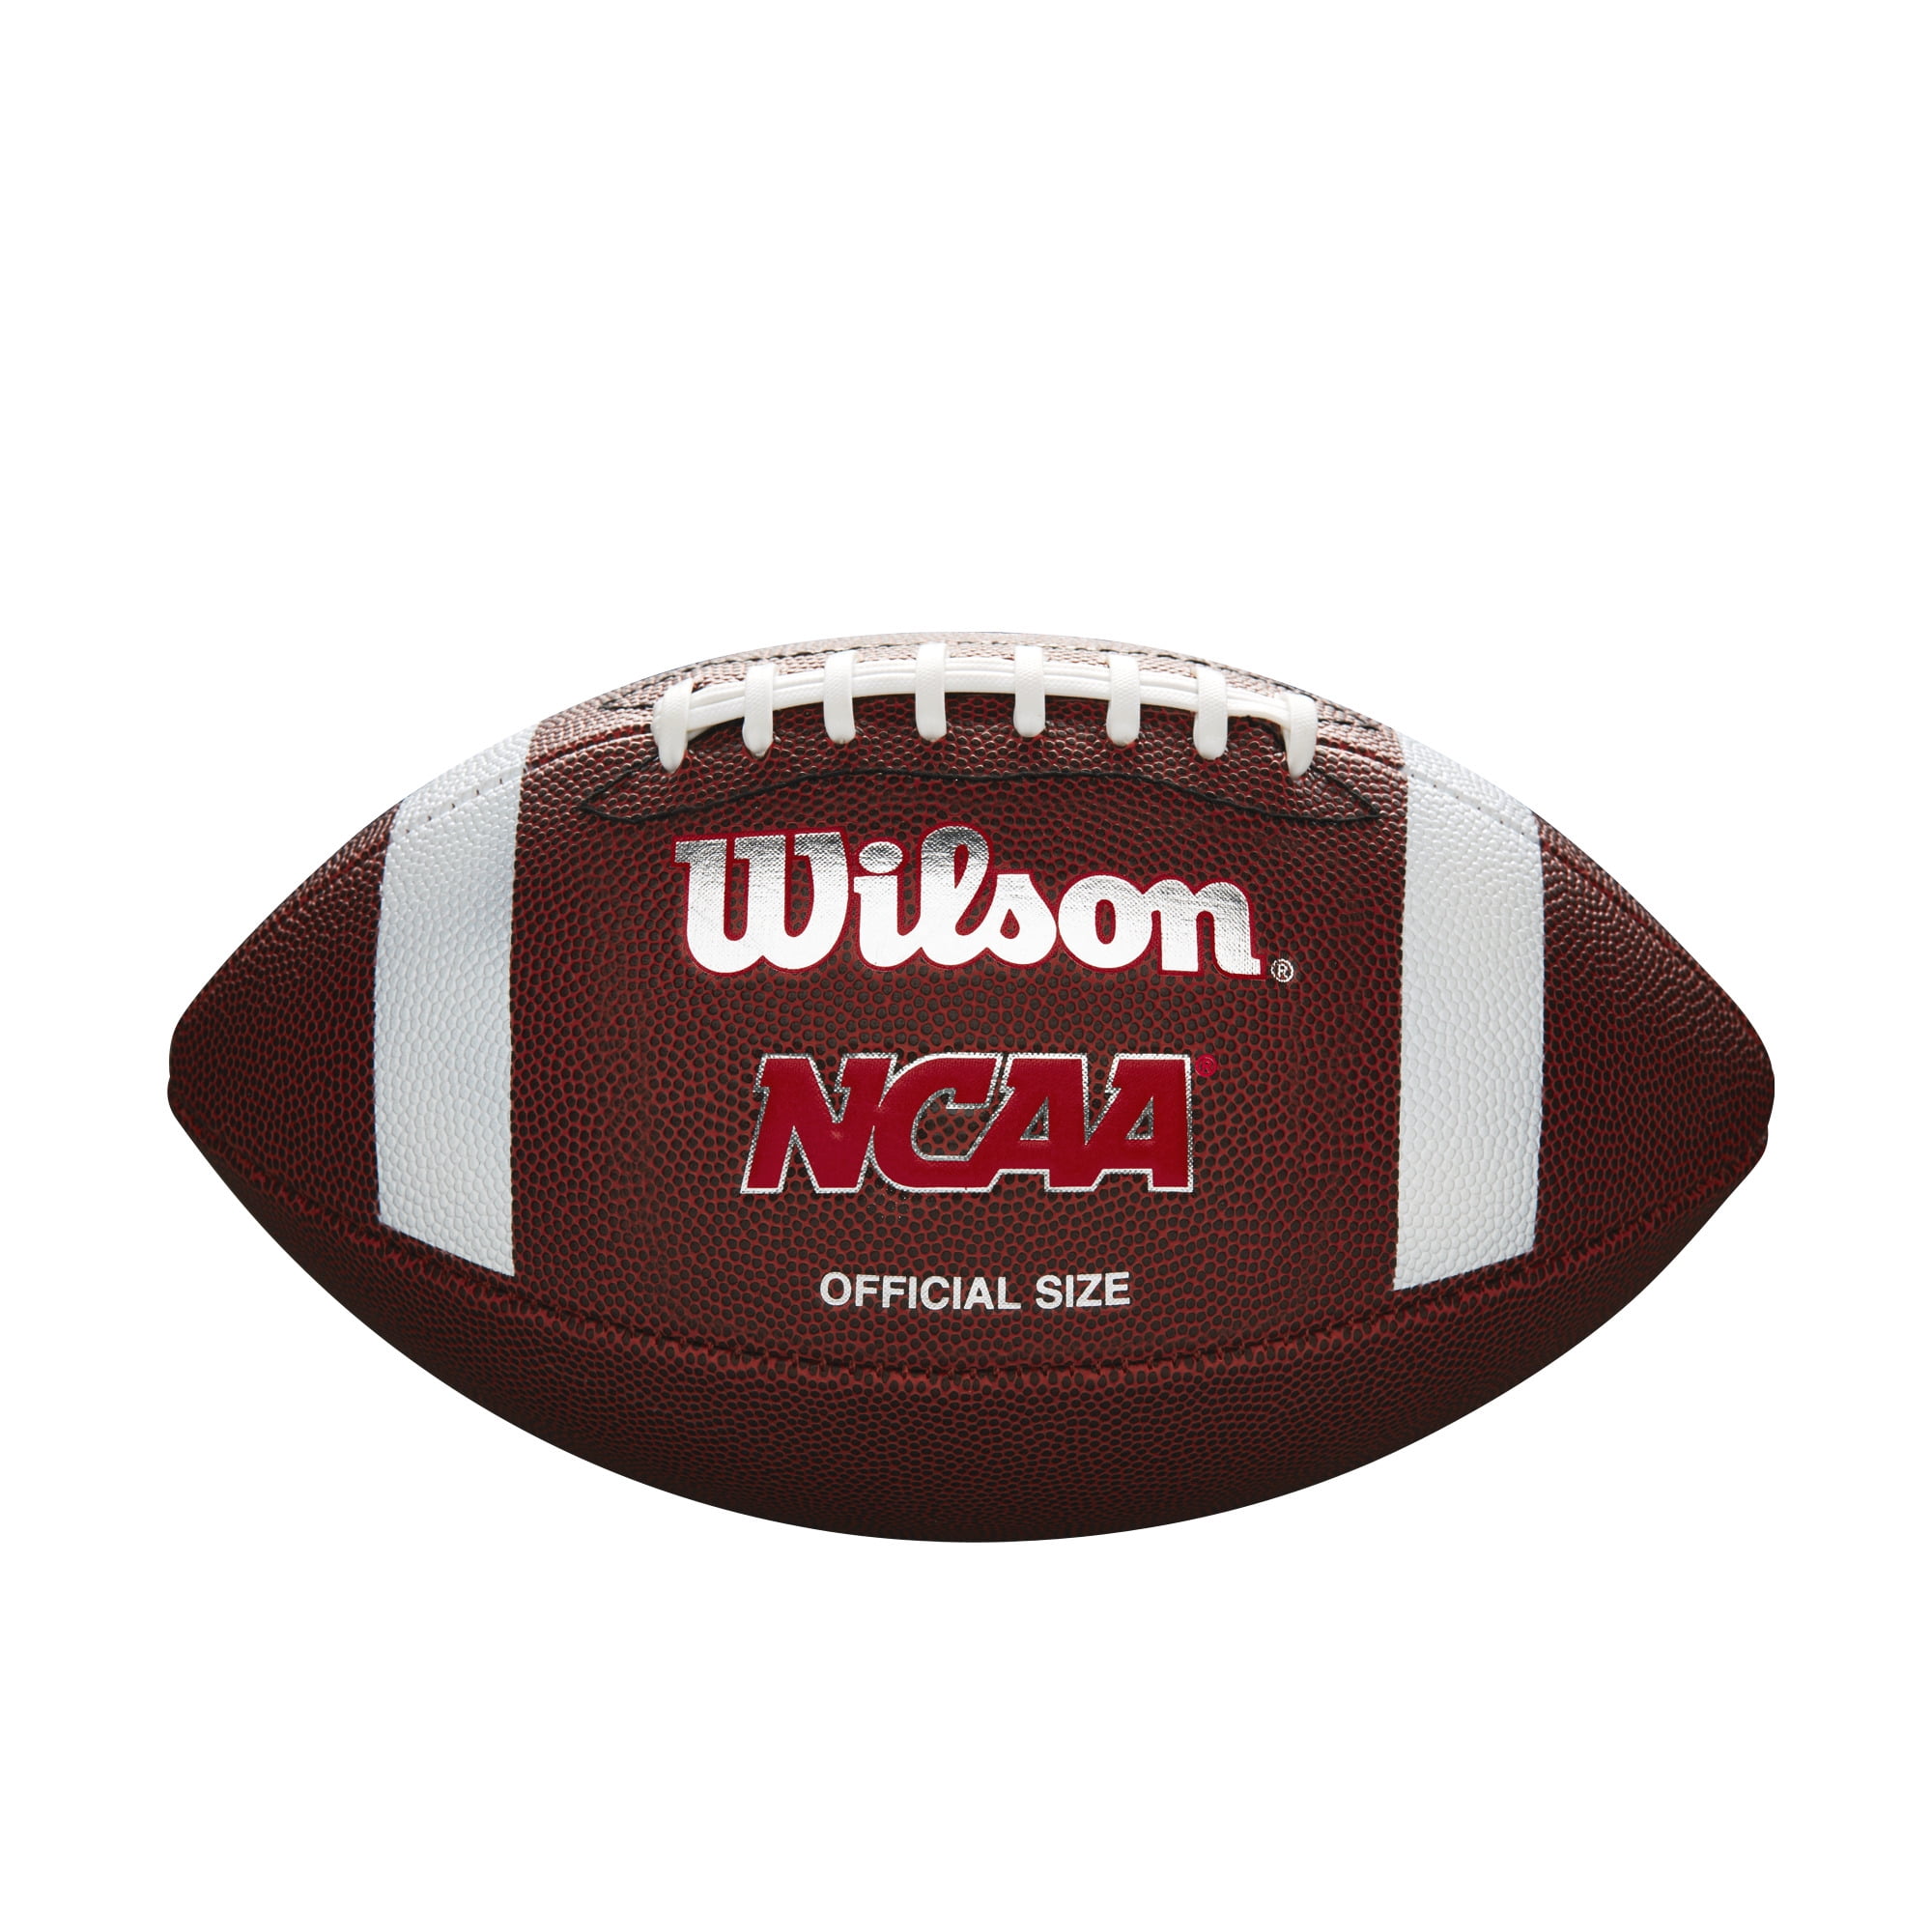 Wilson Nemesis Composite Football Junior Size Black/Red